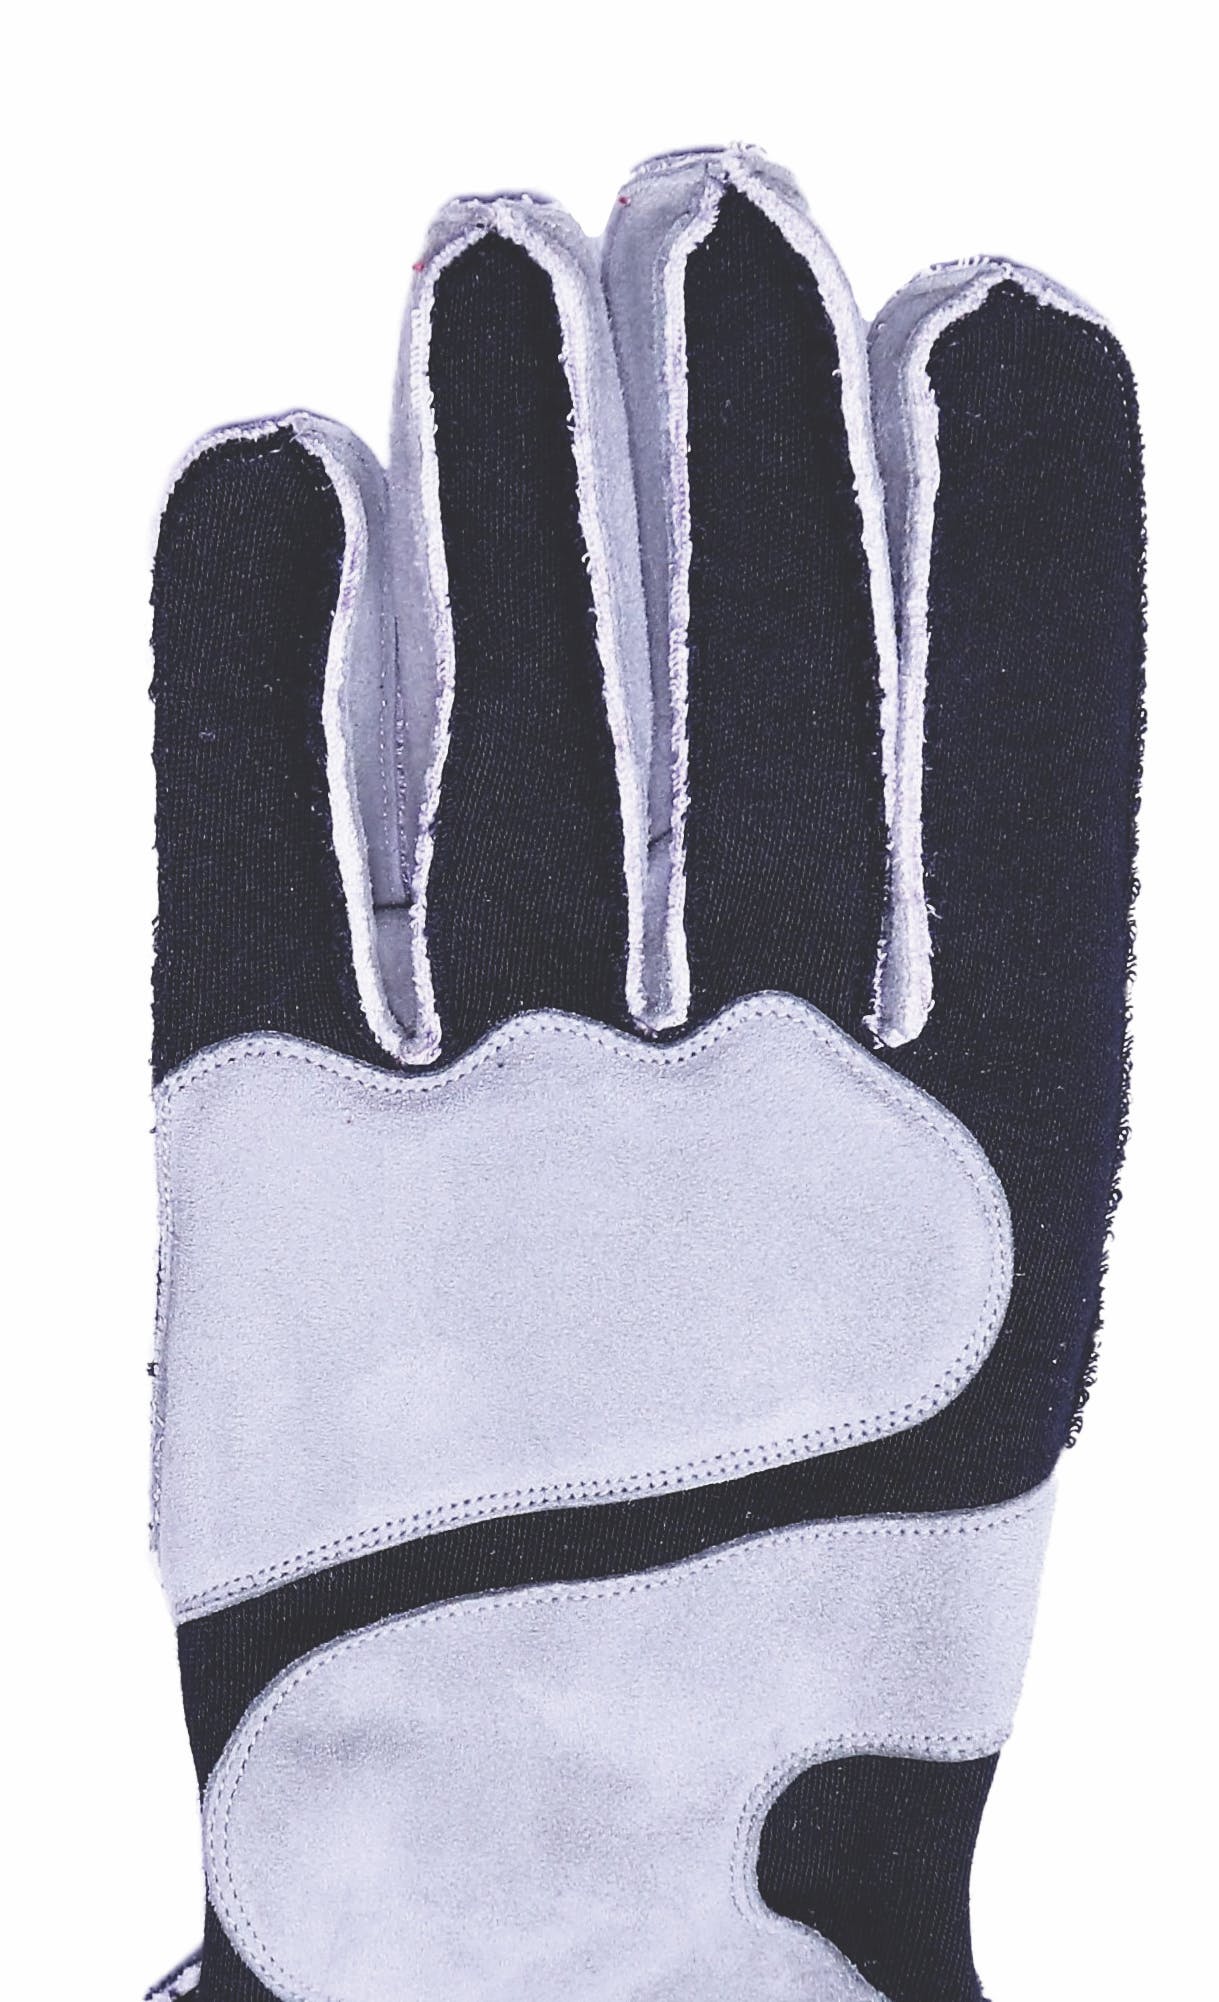 RaceQuip 356602 SFI-5 Angle-Cut Cuffed Racing Gloves (Gray/Black, Small)